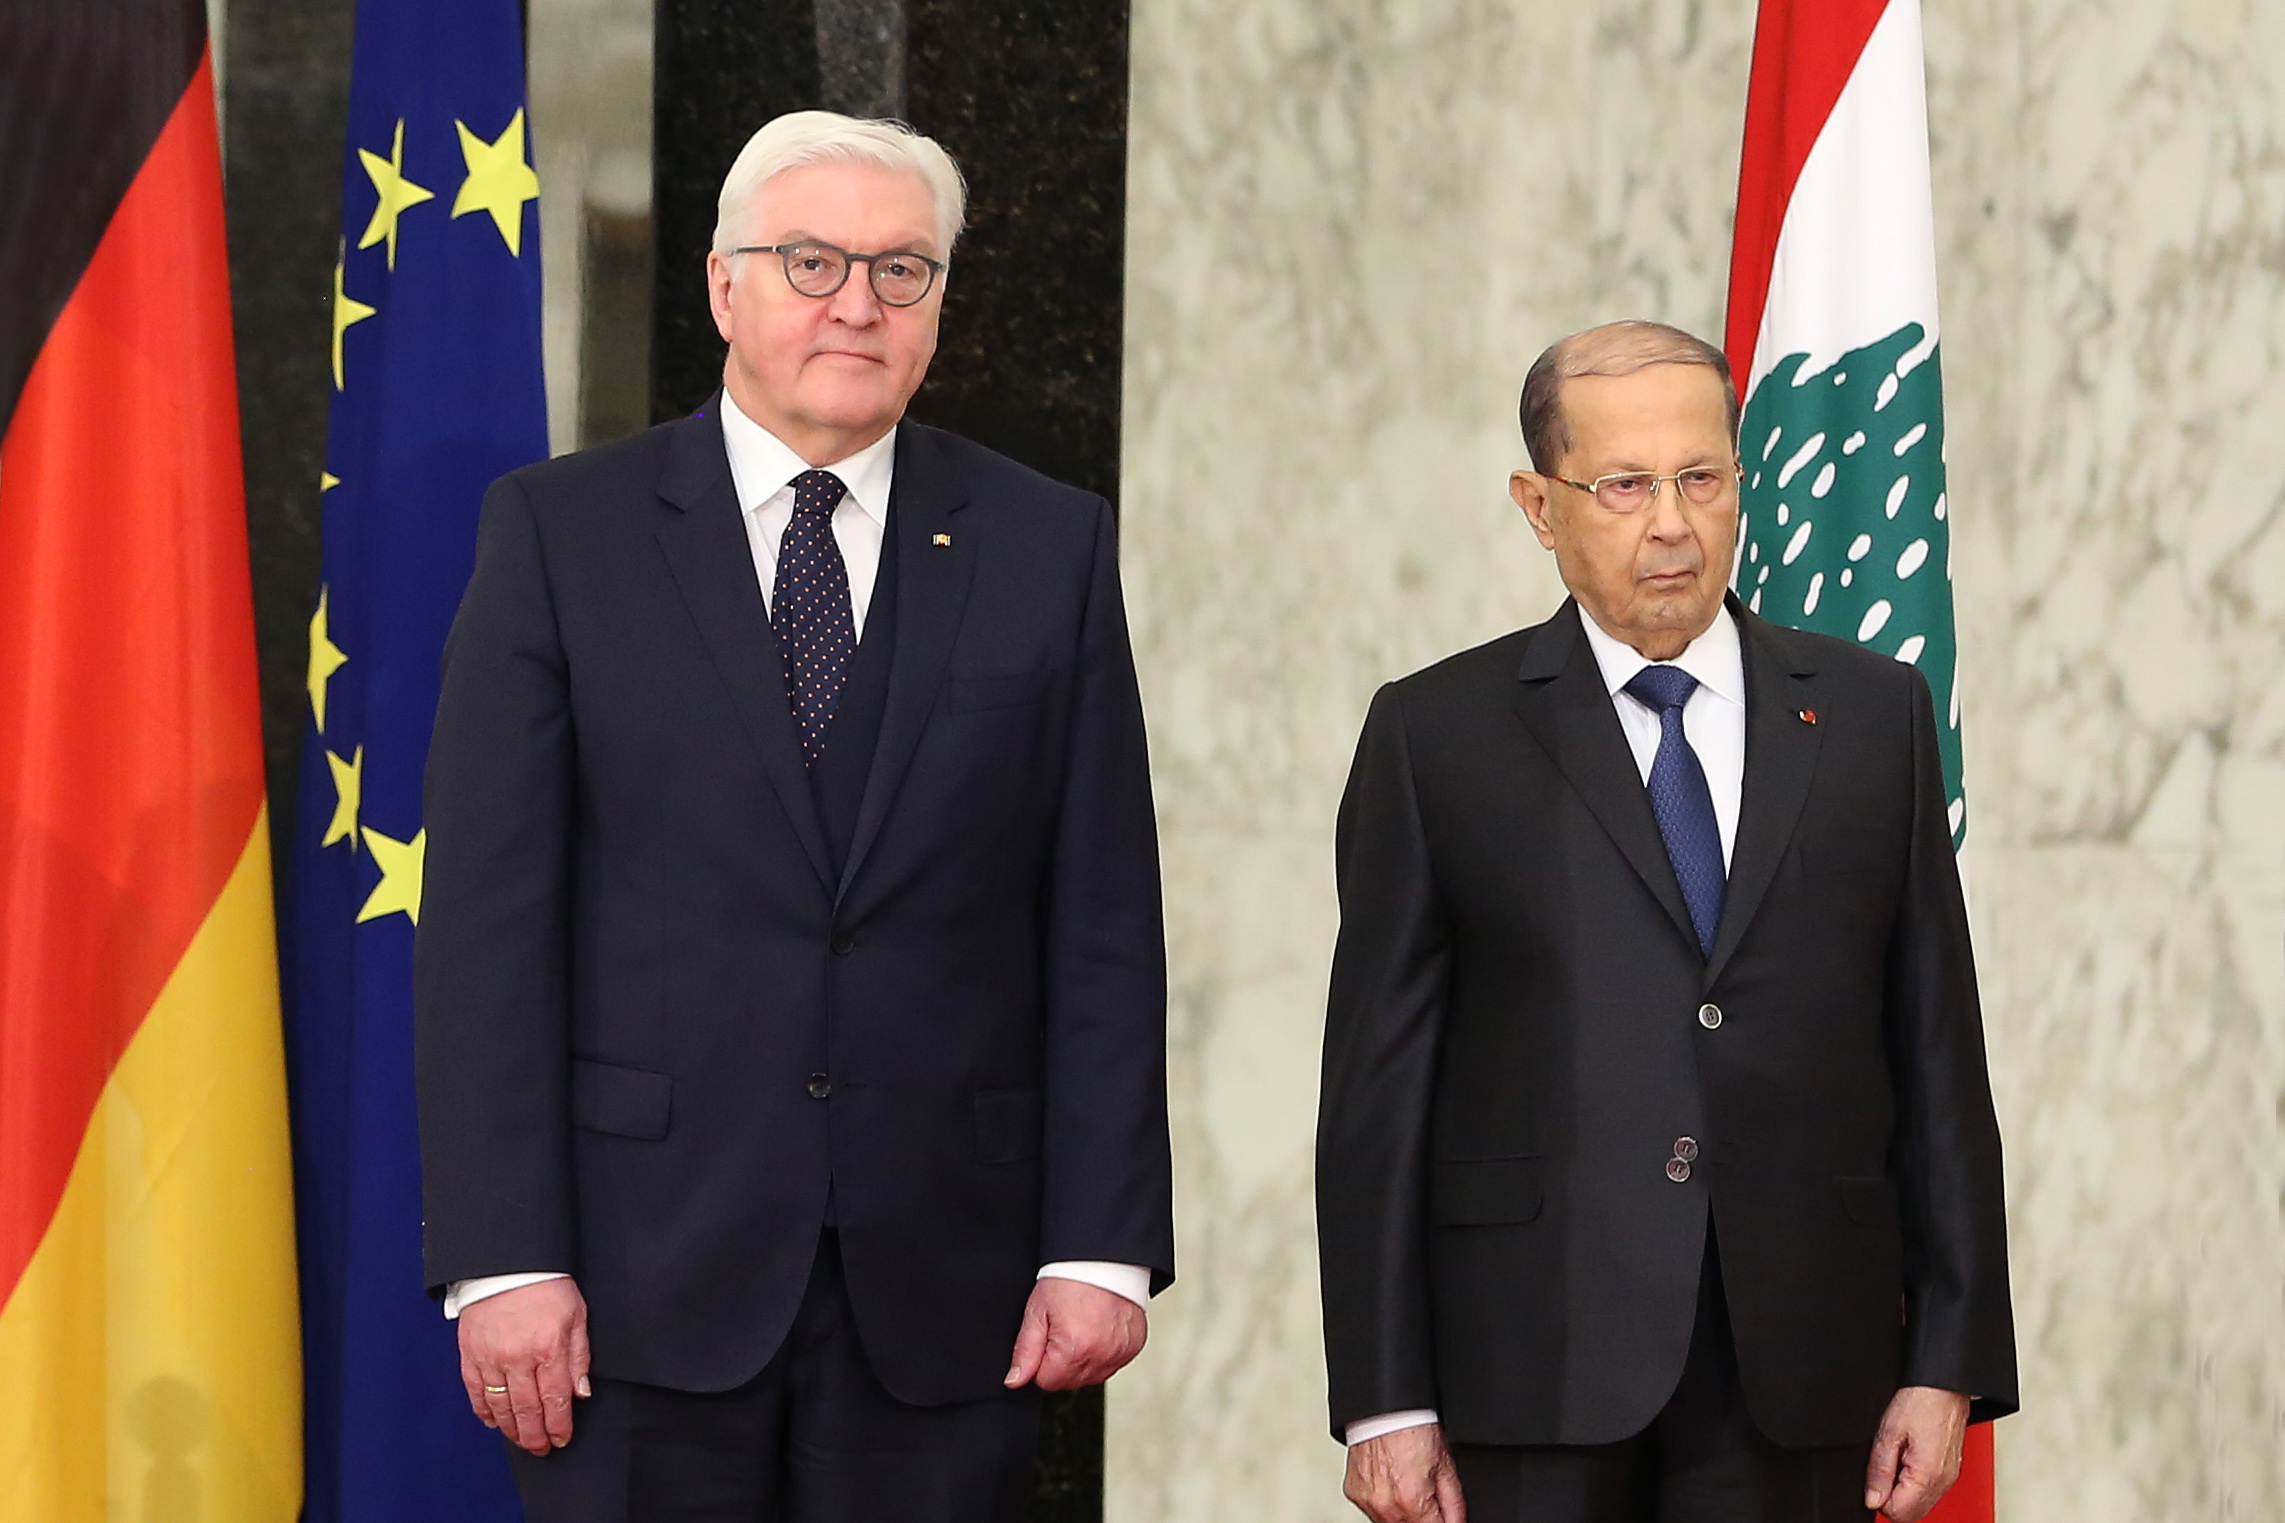 Lebanese and German presidents, Michel Aoun and Frank-Walter Steimeier